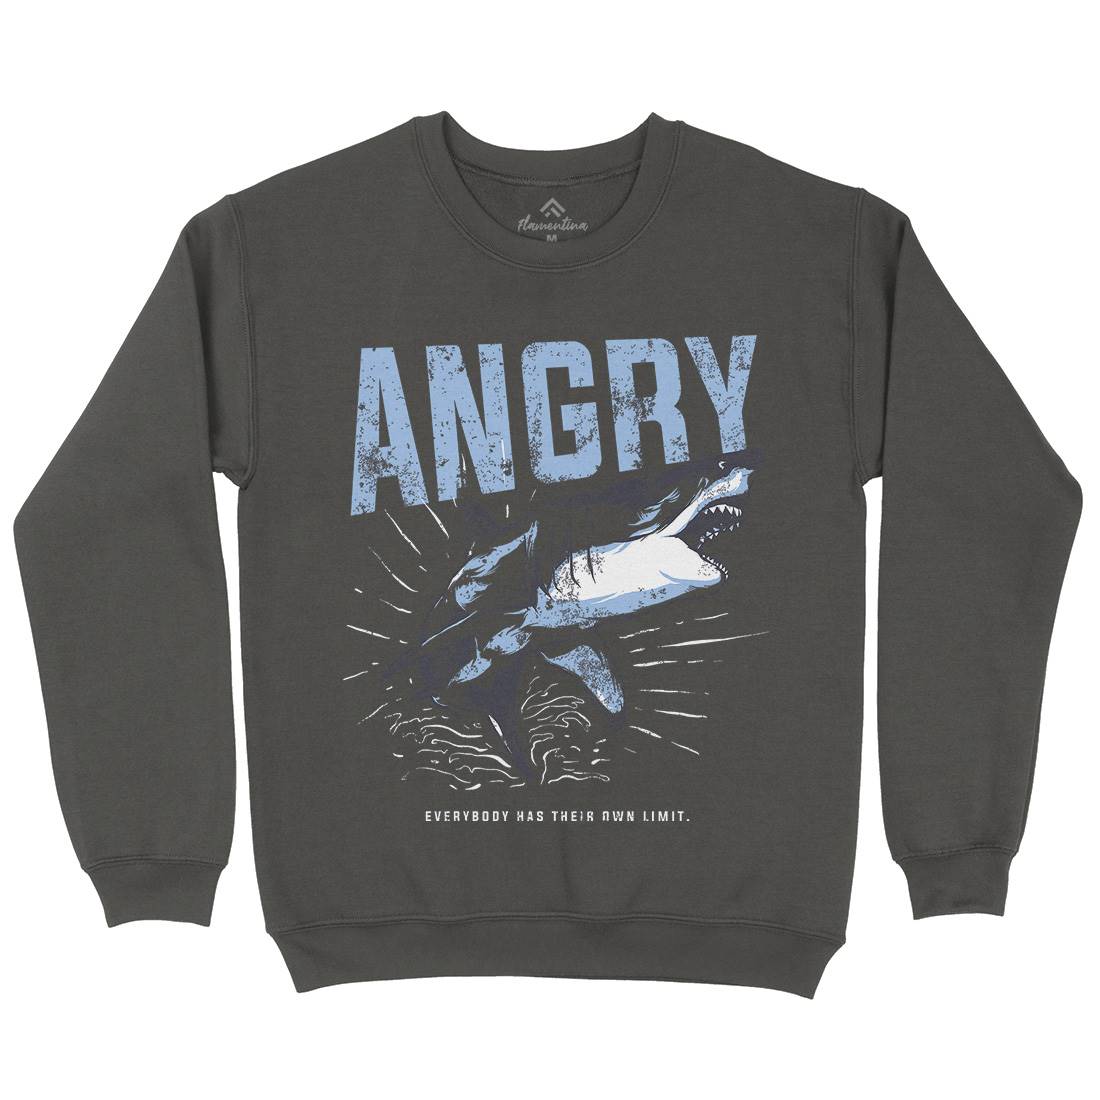 Angry Shark Kids Crew Neck Sweatshirt Fishing B679